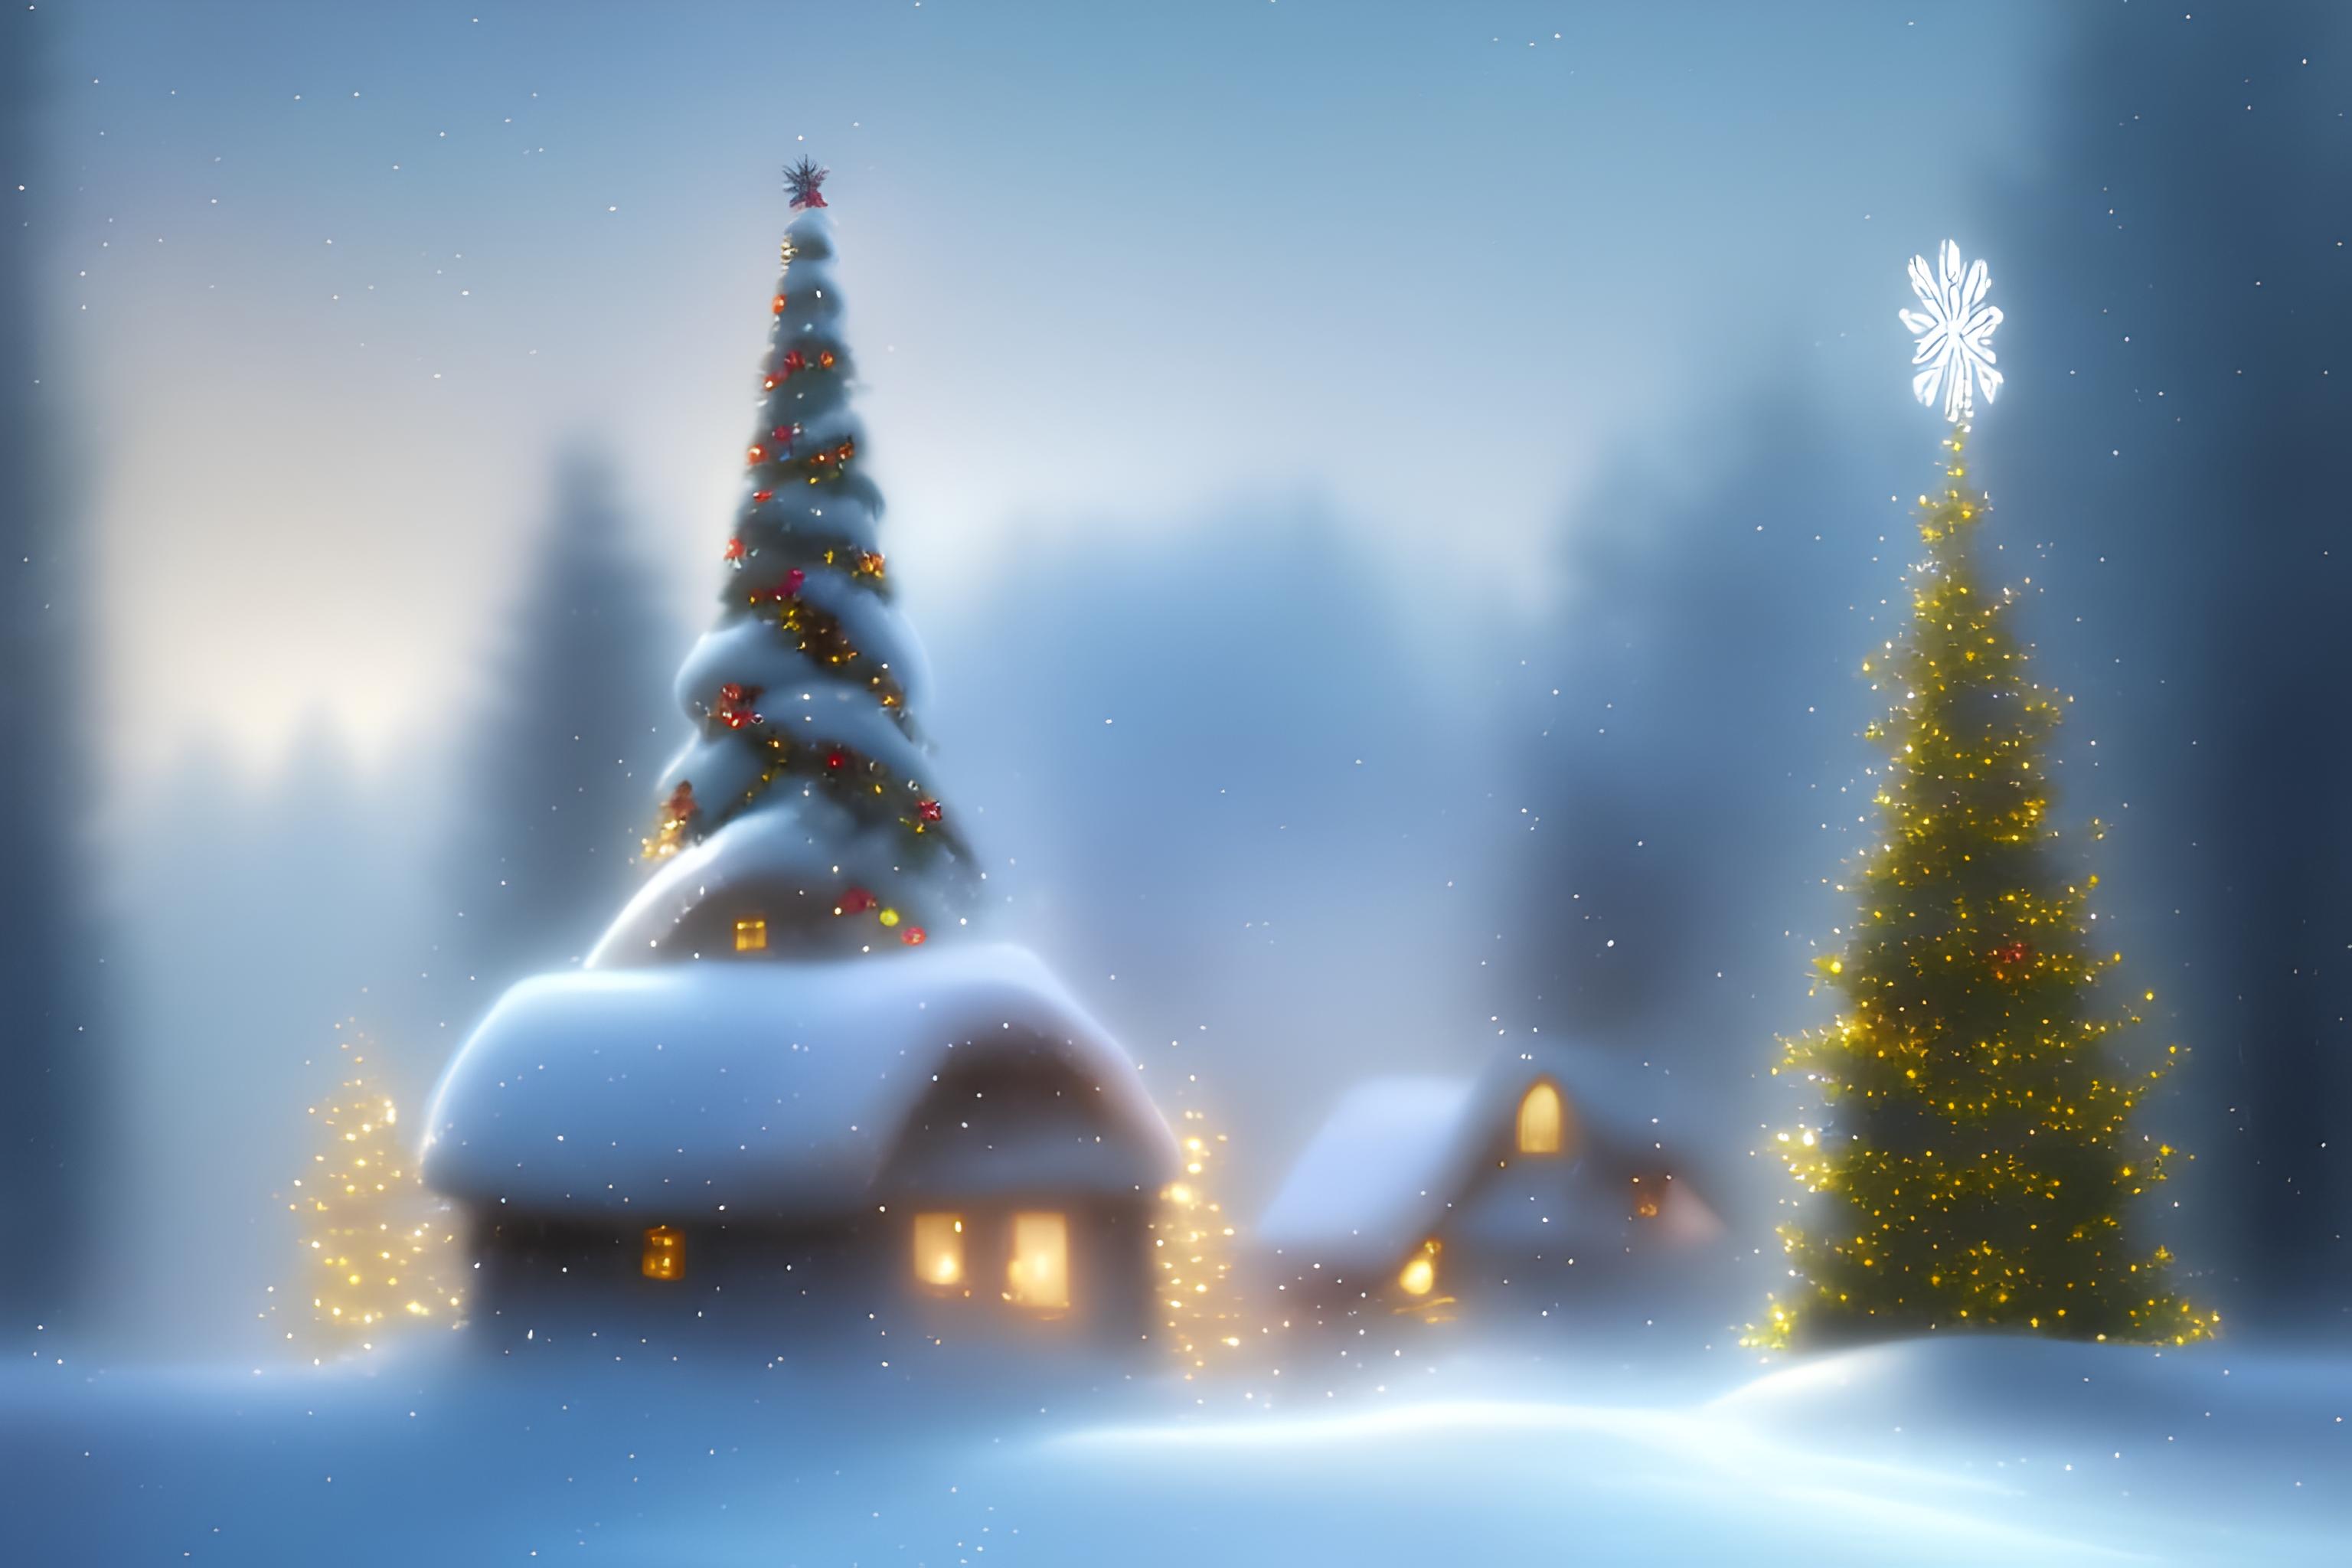 A beautiful Merry Christmas themed festive night scene in winter ...